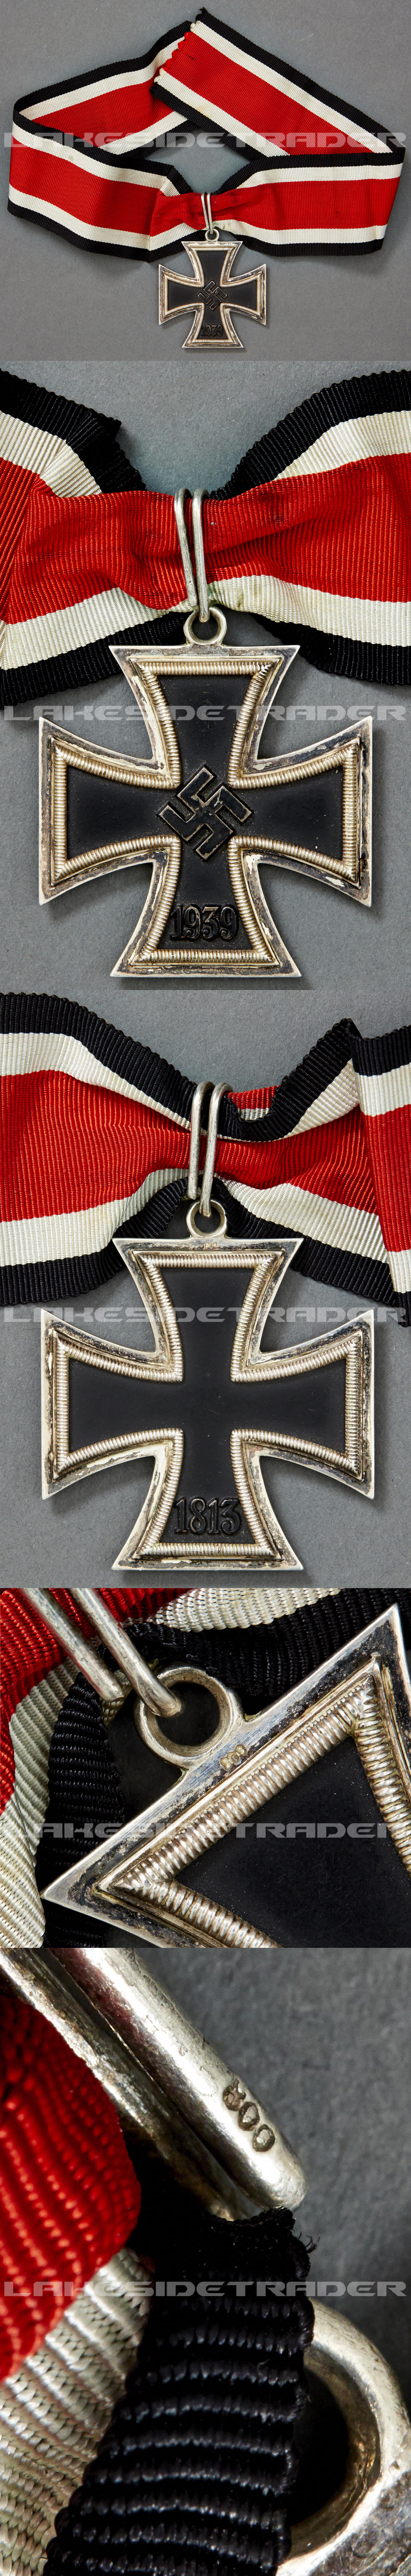 A Knights Cross of the Iron Cross 1939 by Steinhauer & Luck